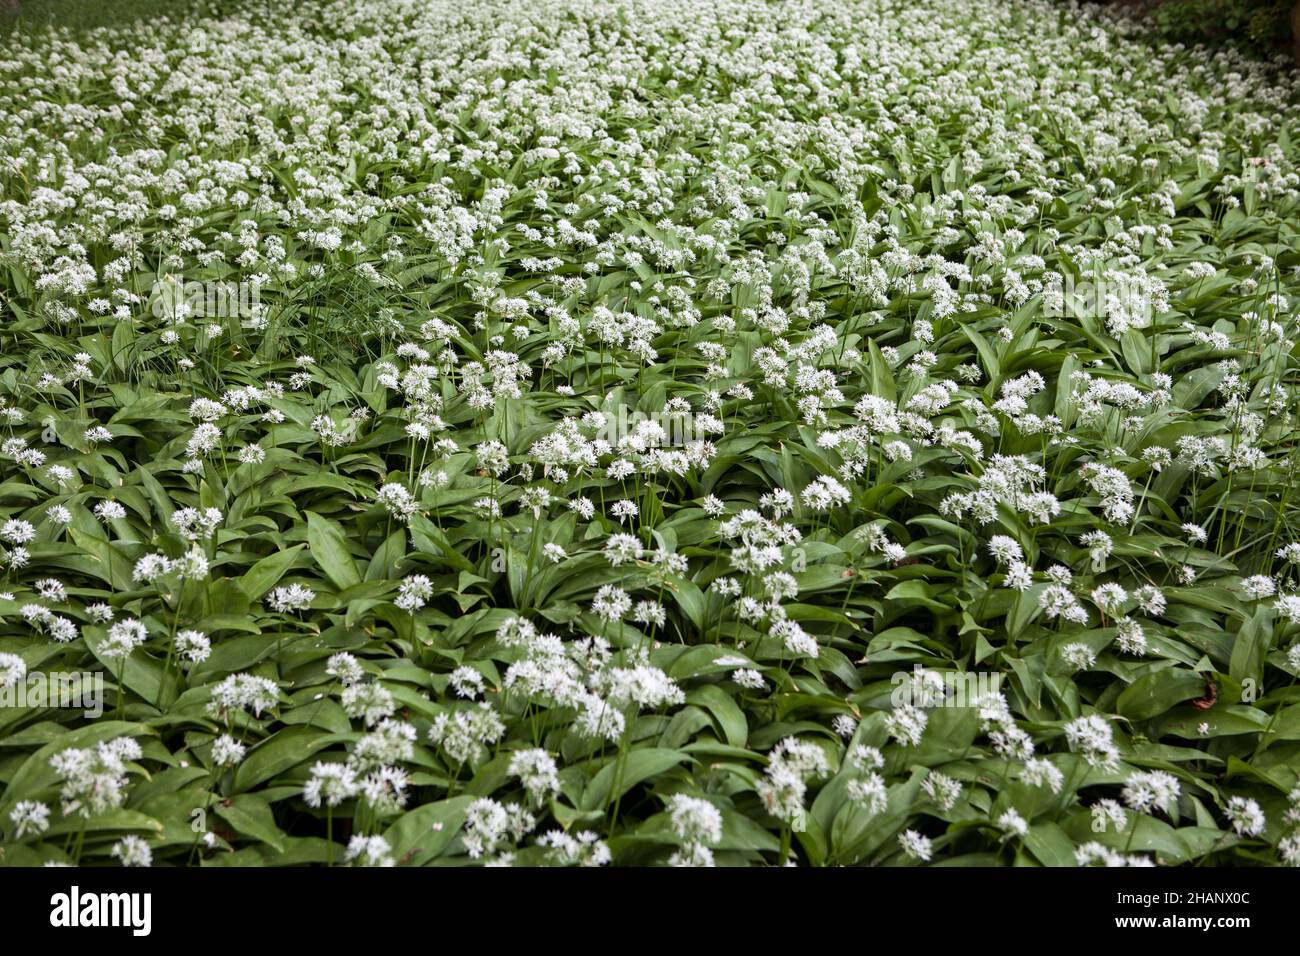 Allium ursinum or wild garlic covers the forest floor, Germany, Europe Stock Photo